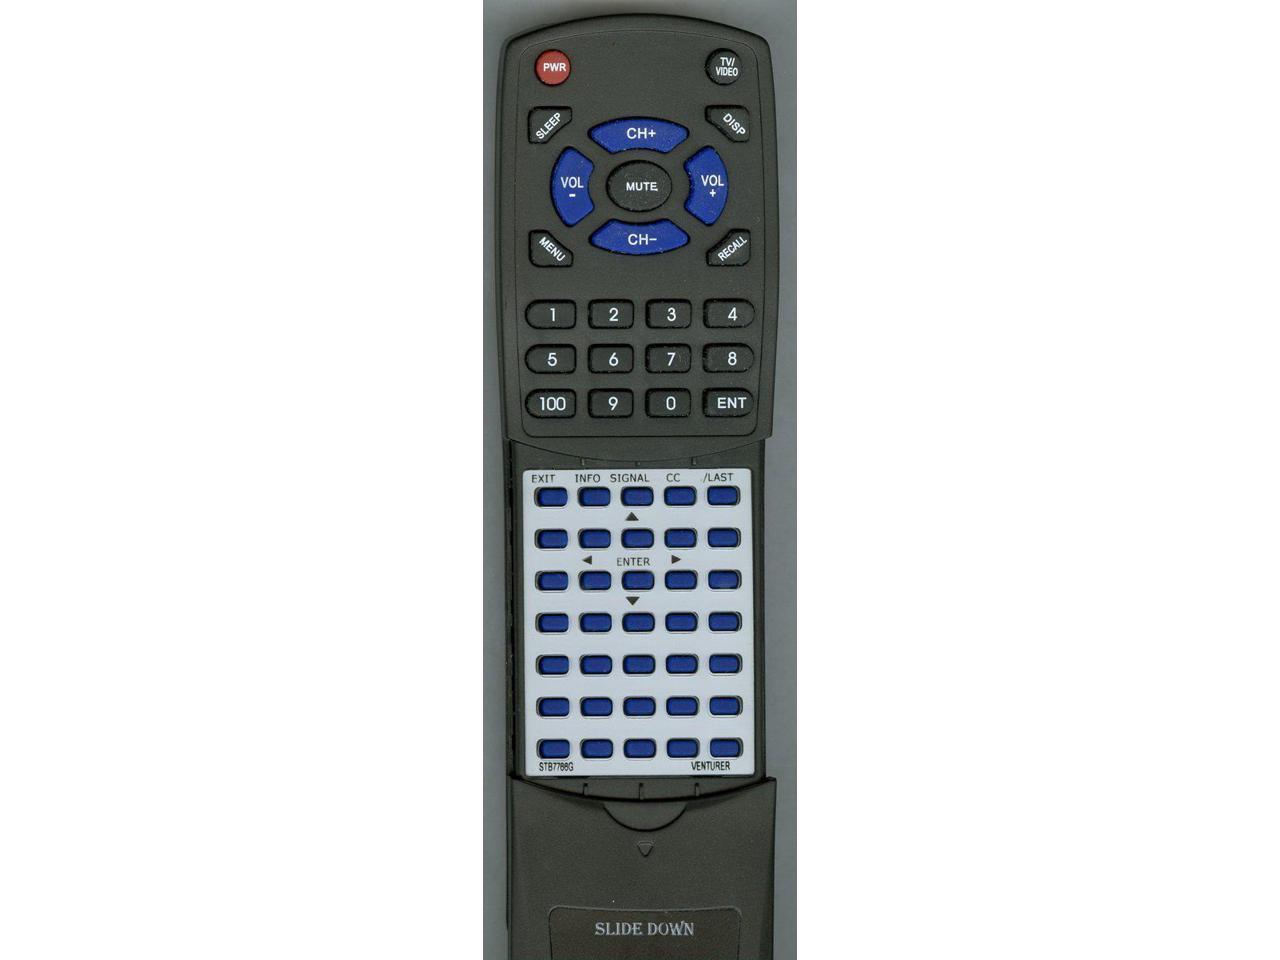 STB7766G1 New Remote Control For RCA STB7766C STB7766G Digital Converter Box 